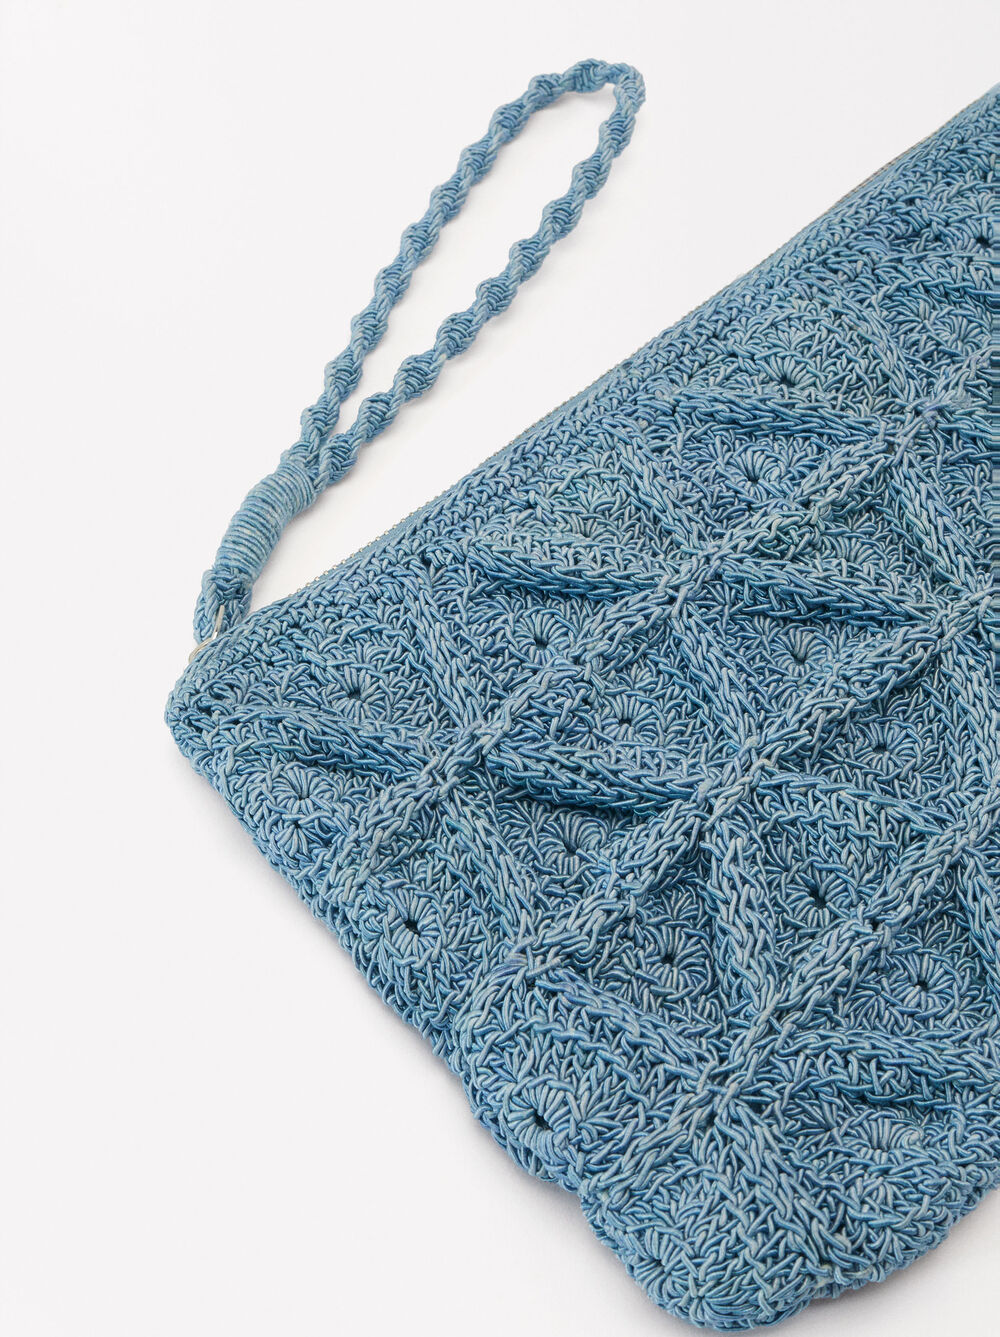 Crochet Party Bag